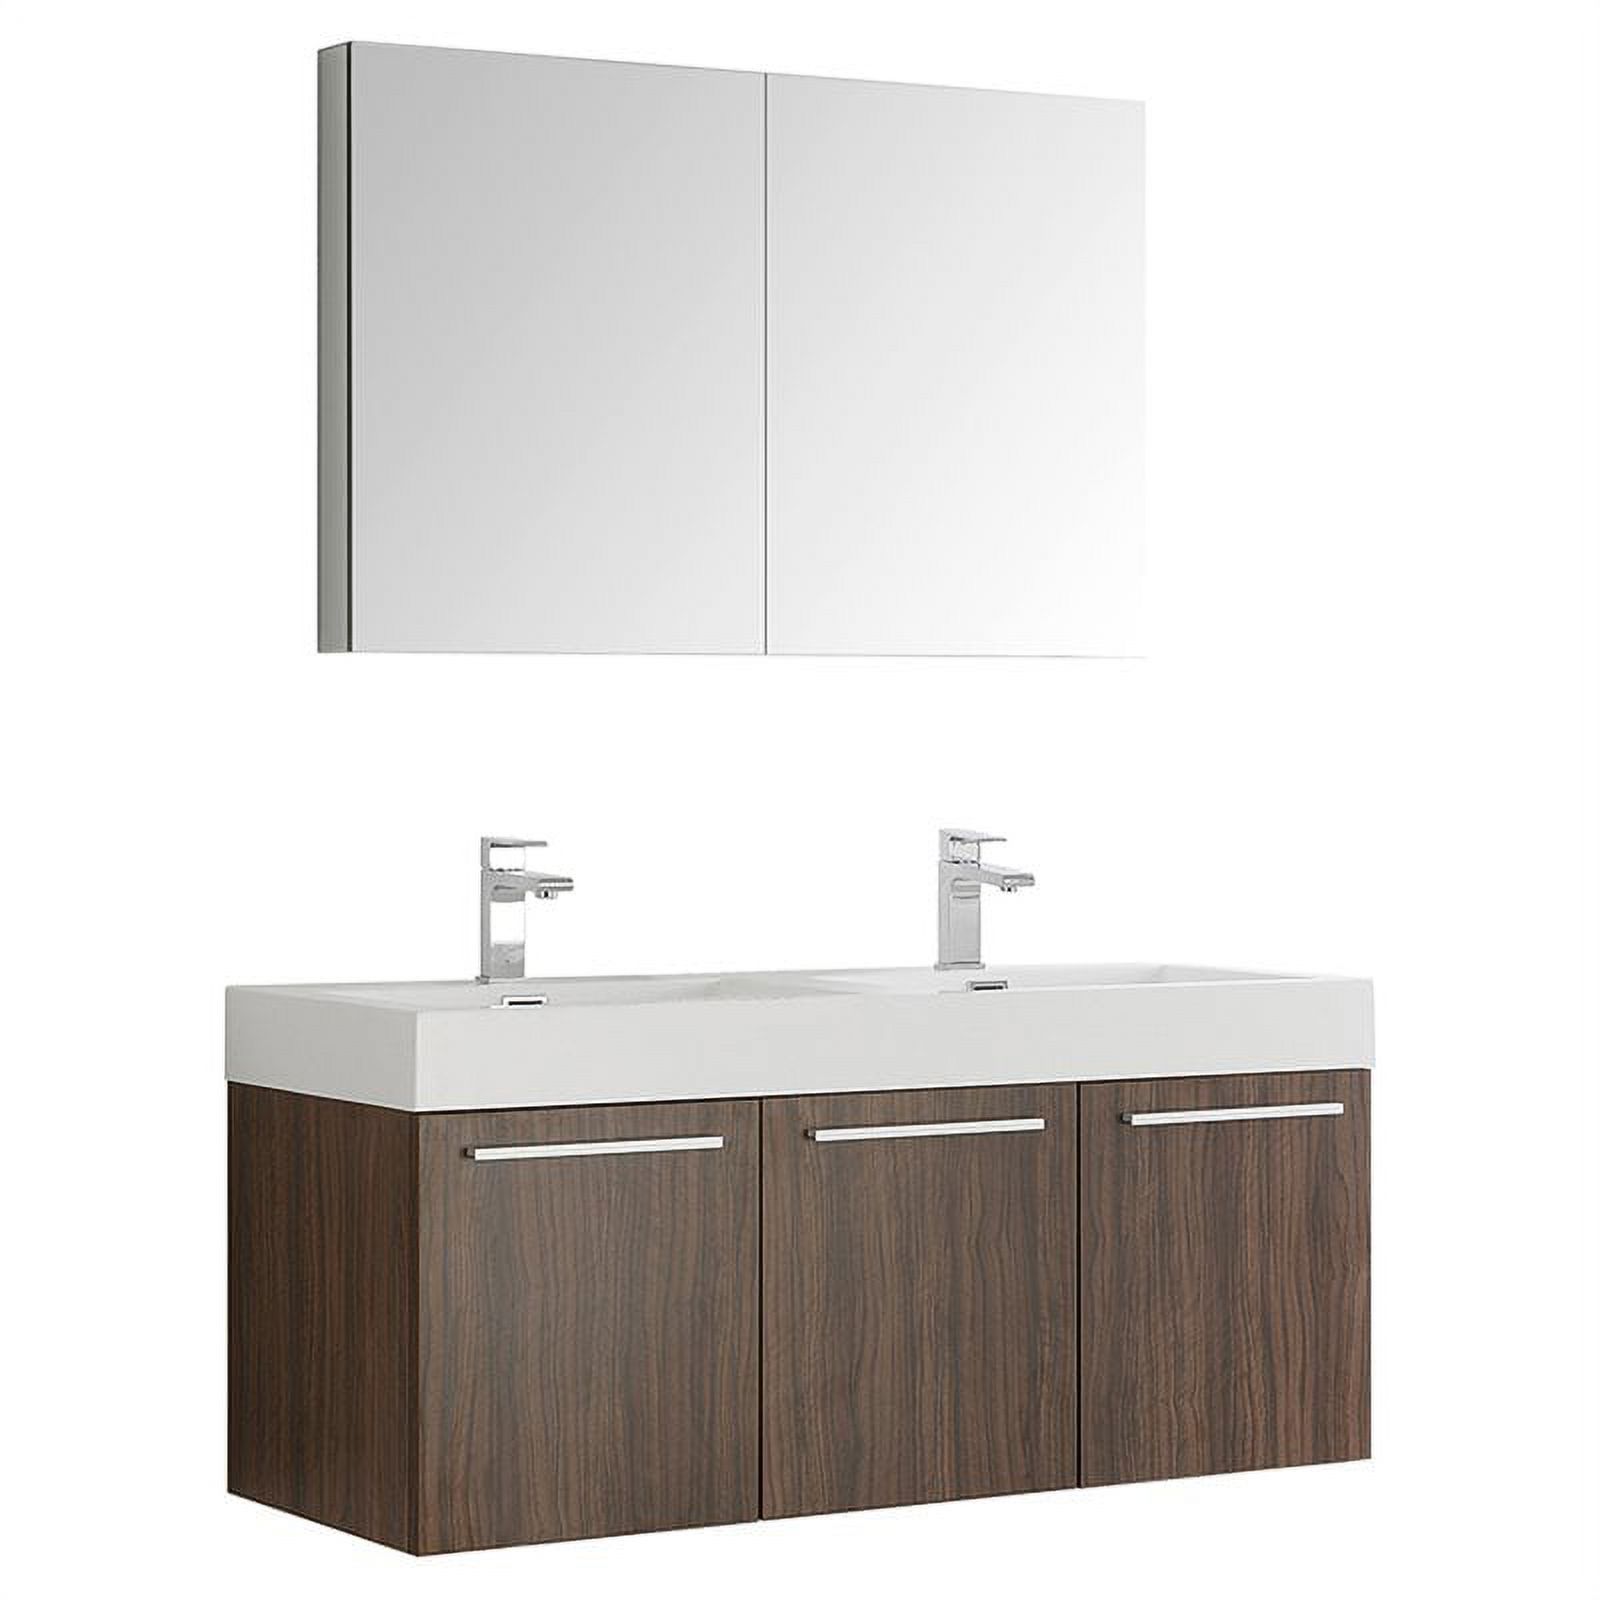 Vista 48"Walnut Wall Hung Dbl Sink Bathroom Vanity & Medicine Cabinet - image 1 of 5